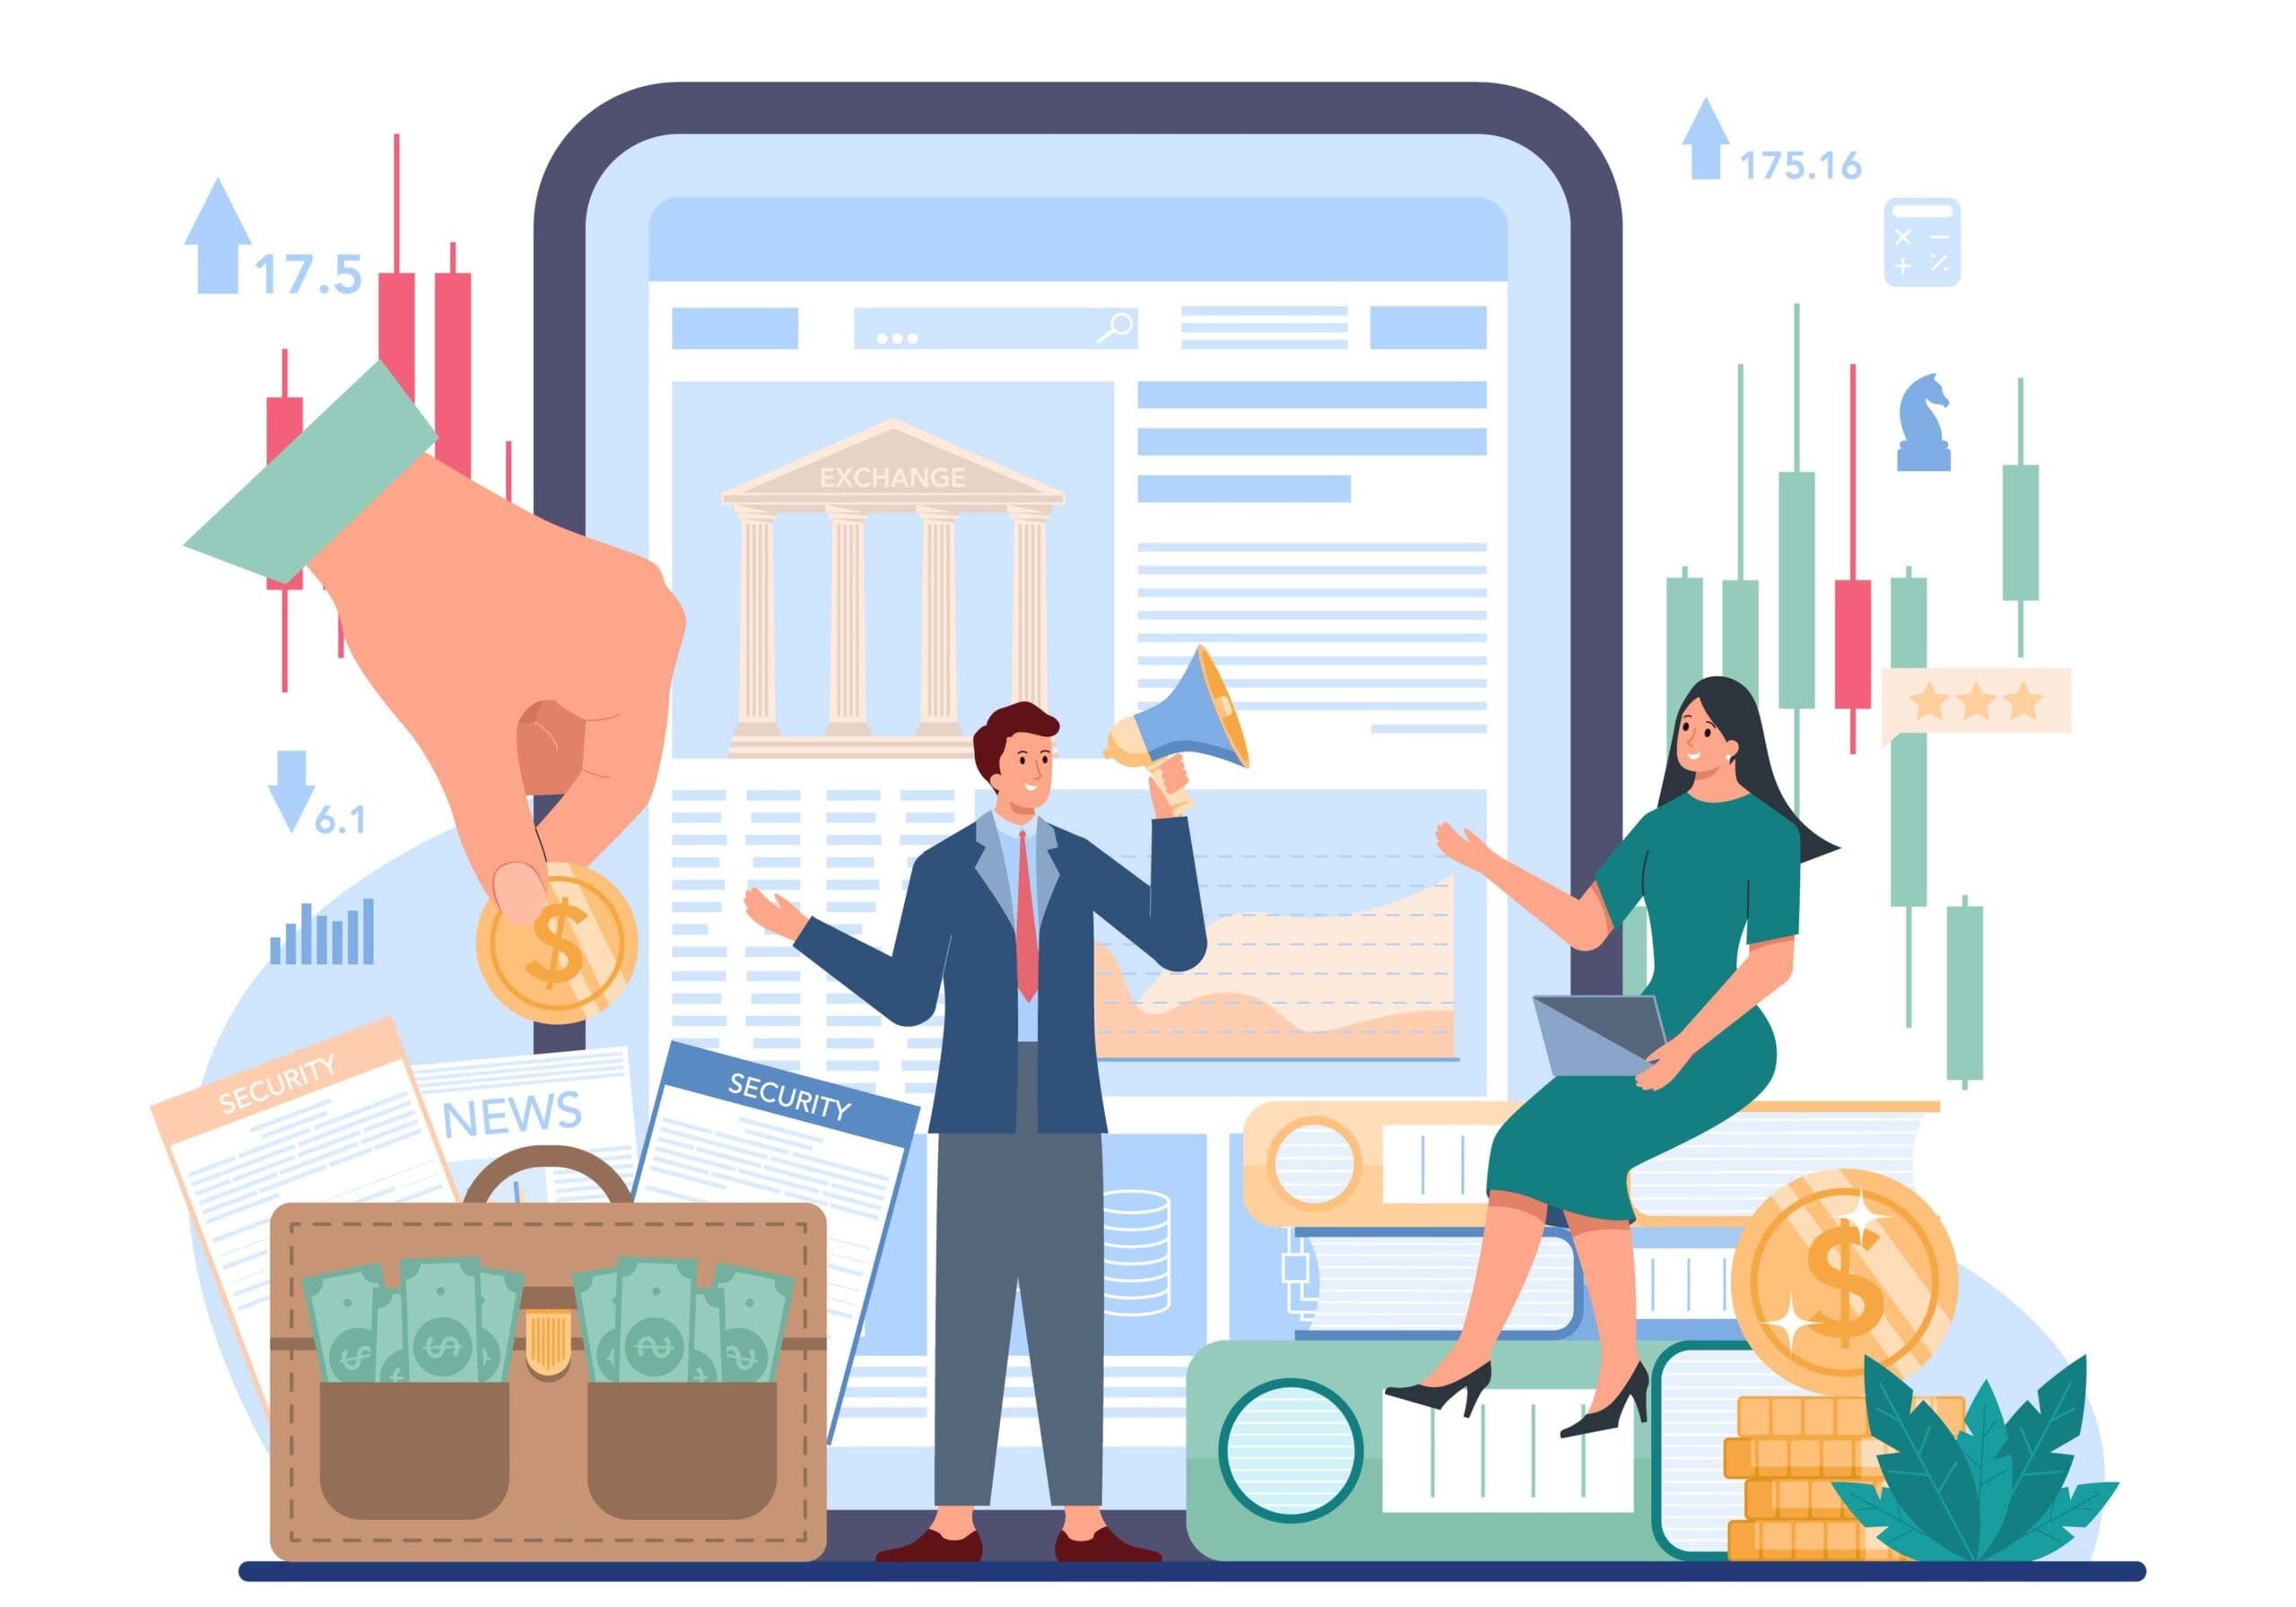 Trader, financial investment online service or platform. Stock market analysis. Idea of money increase. Online financial news platform. Vector illustration